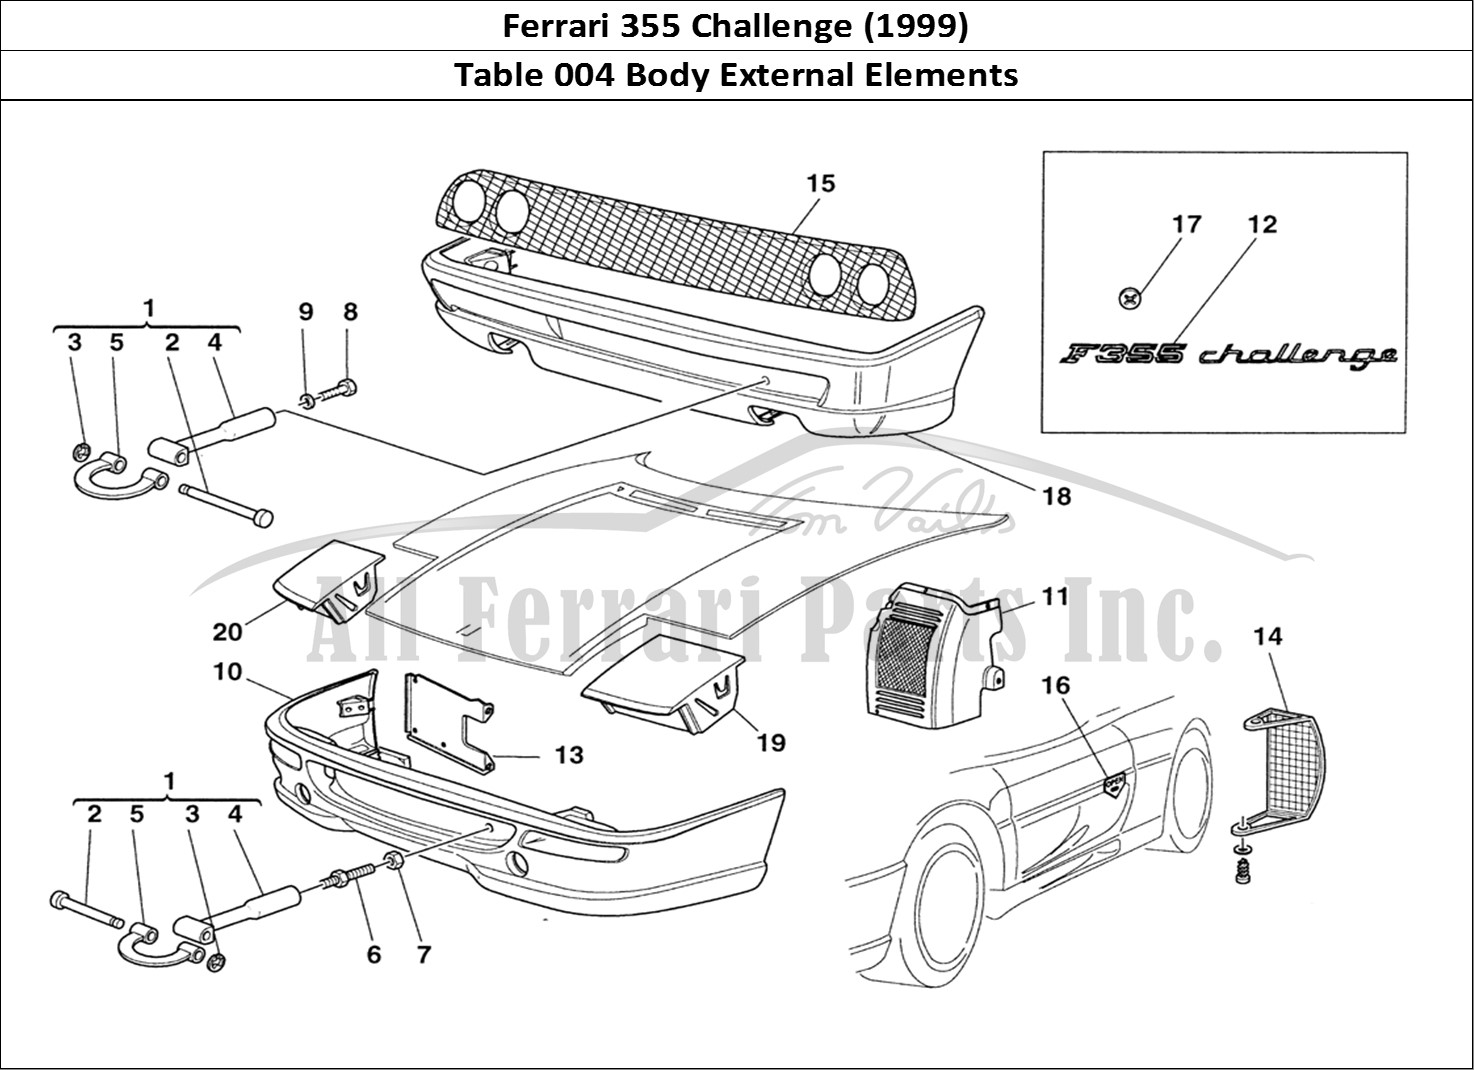 Ferrari Parts Ferrari 355 Challenge (1999) Page 004 Body External Elements